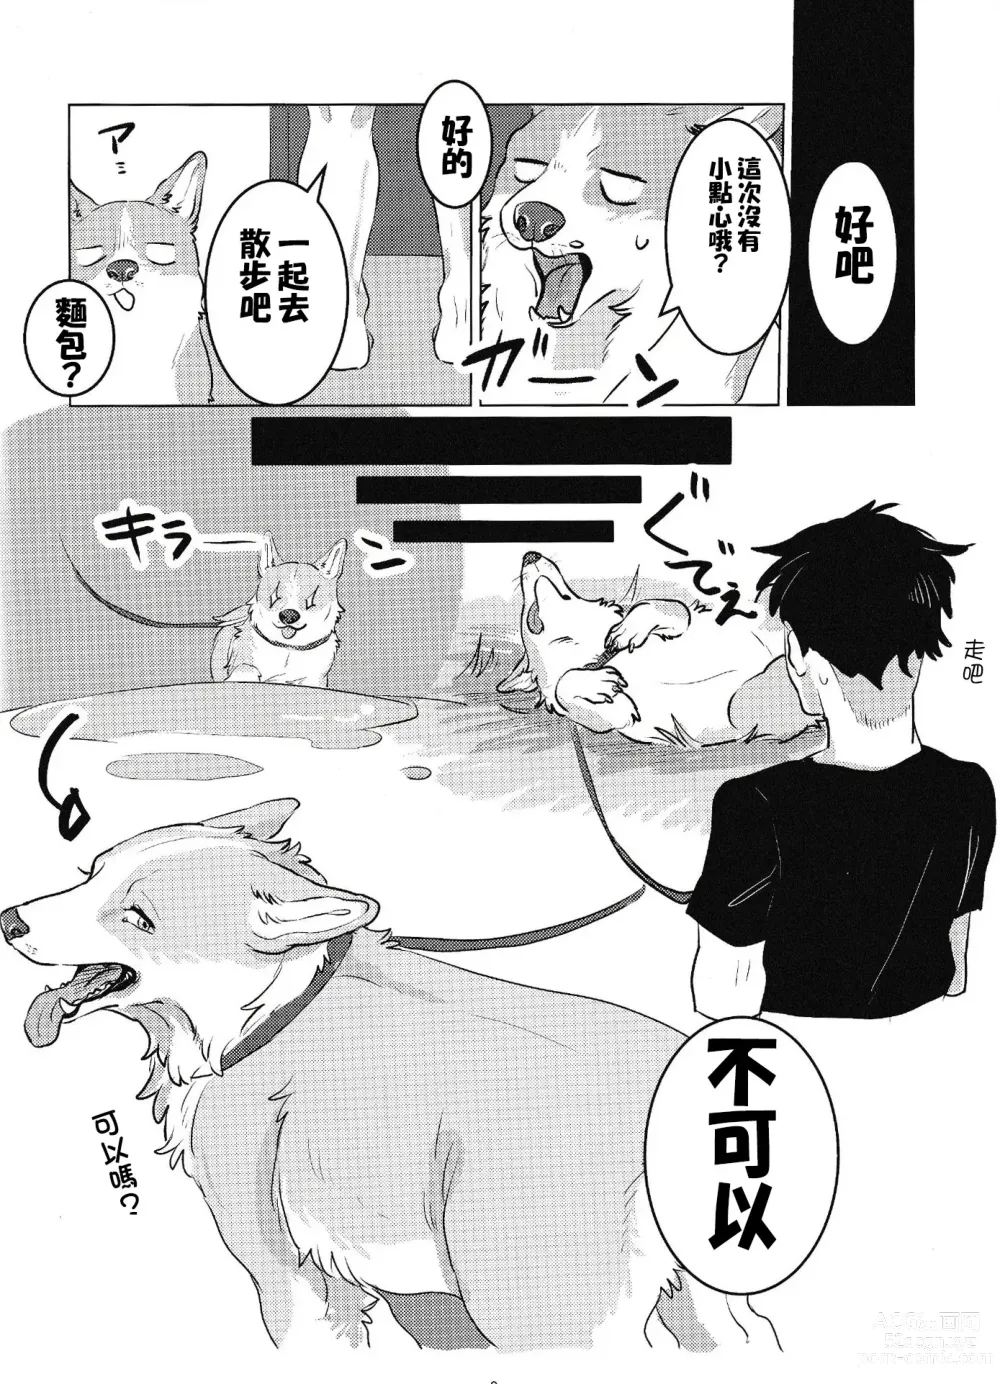 Page 7 of doujinshi 魅惑のパン